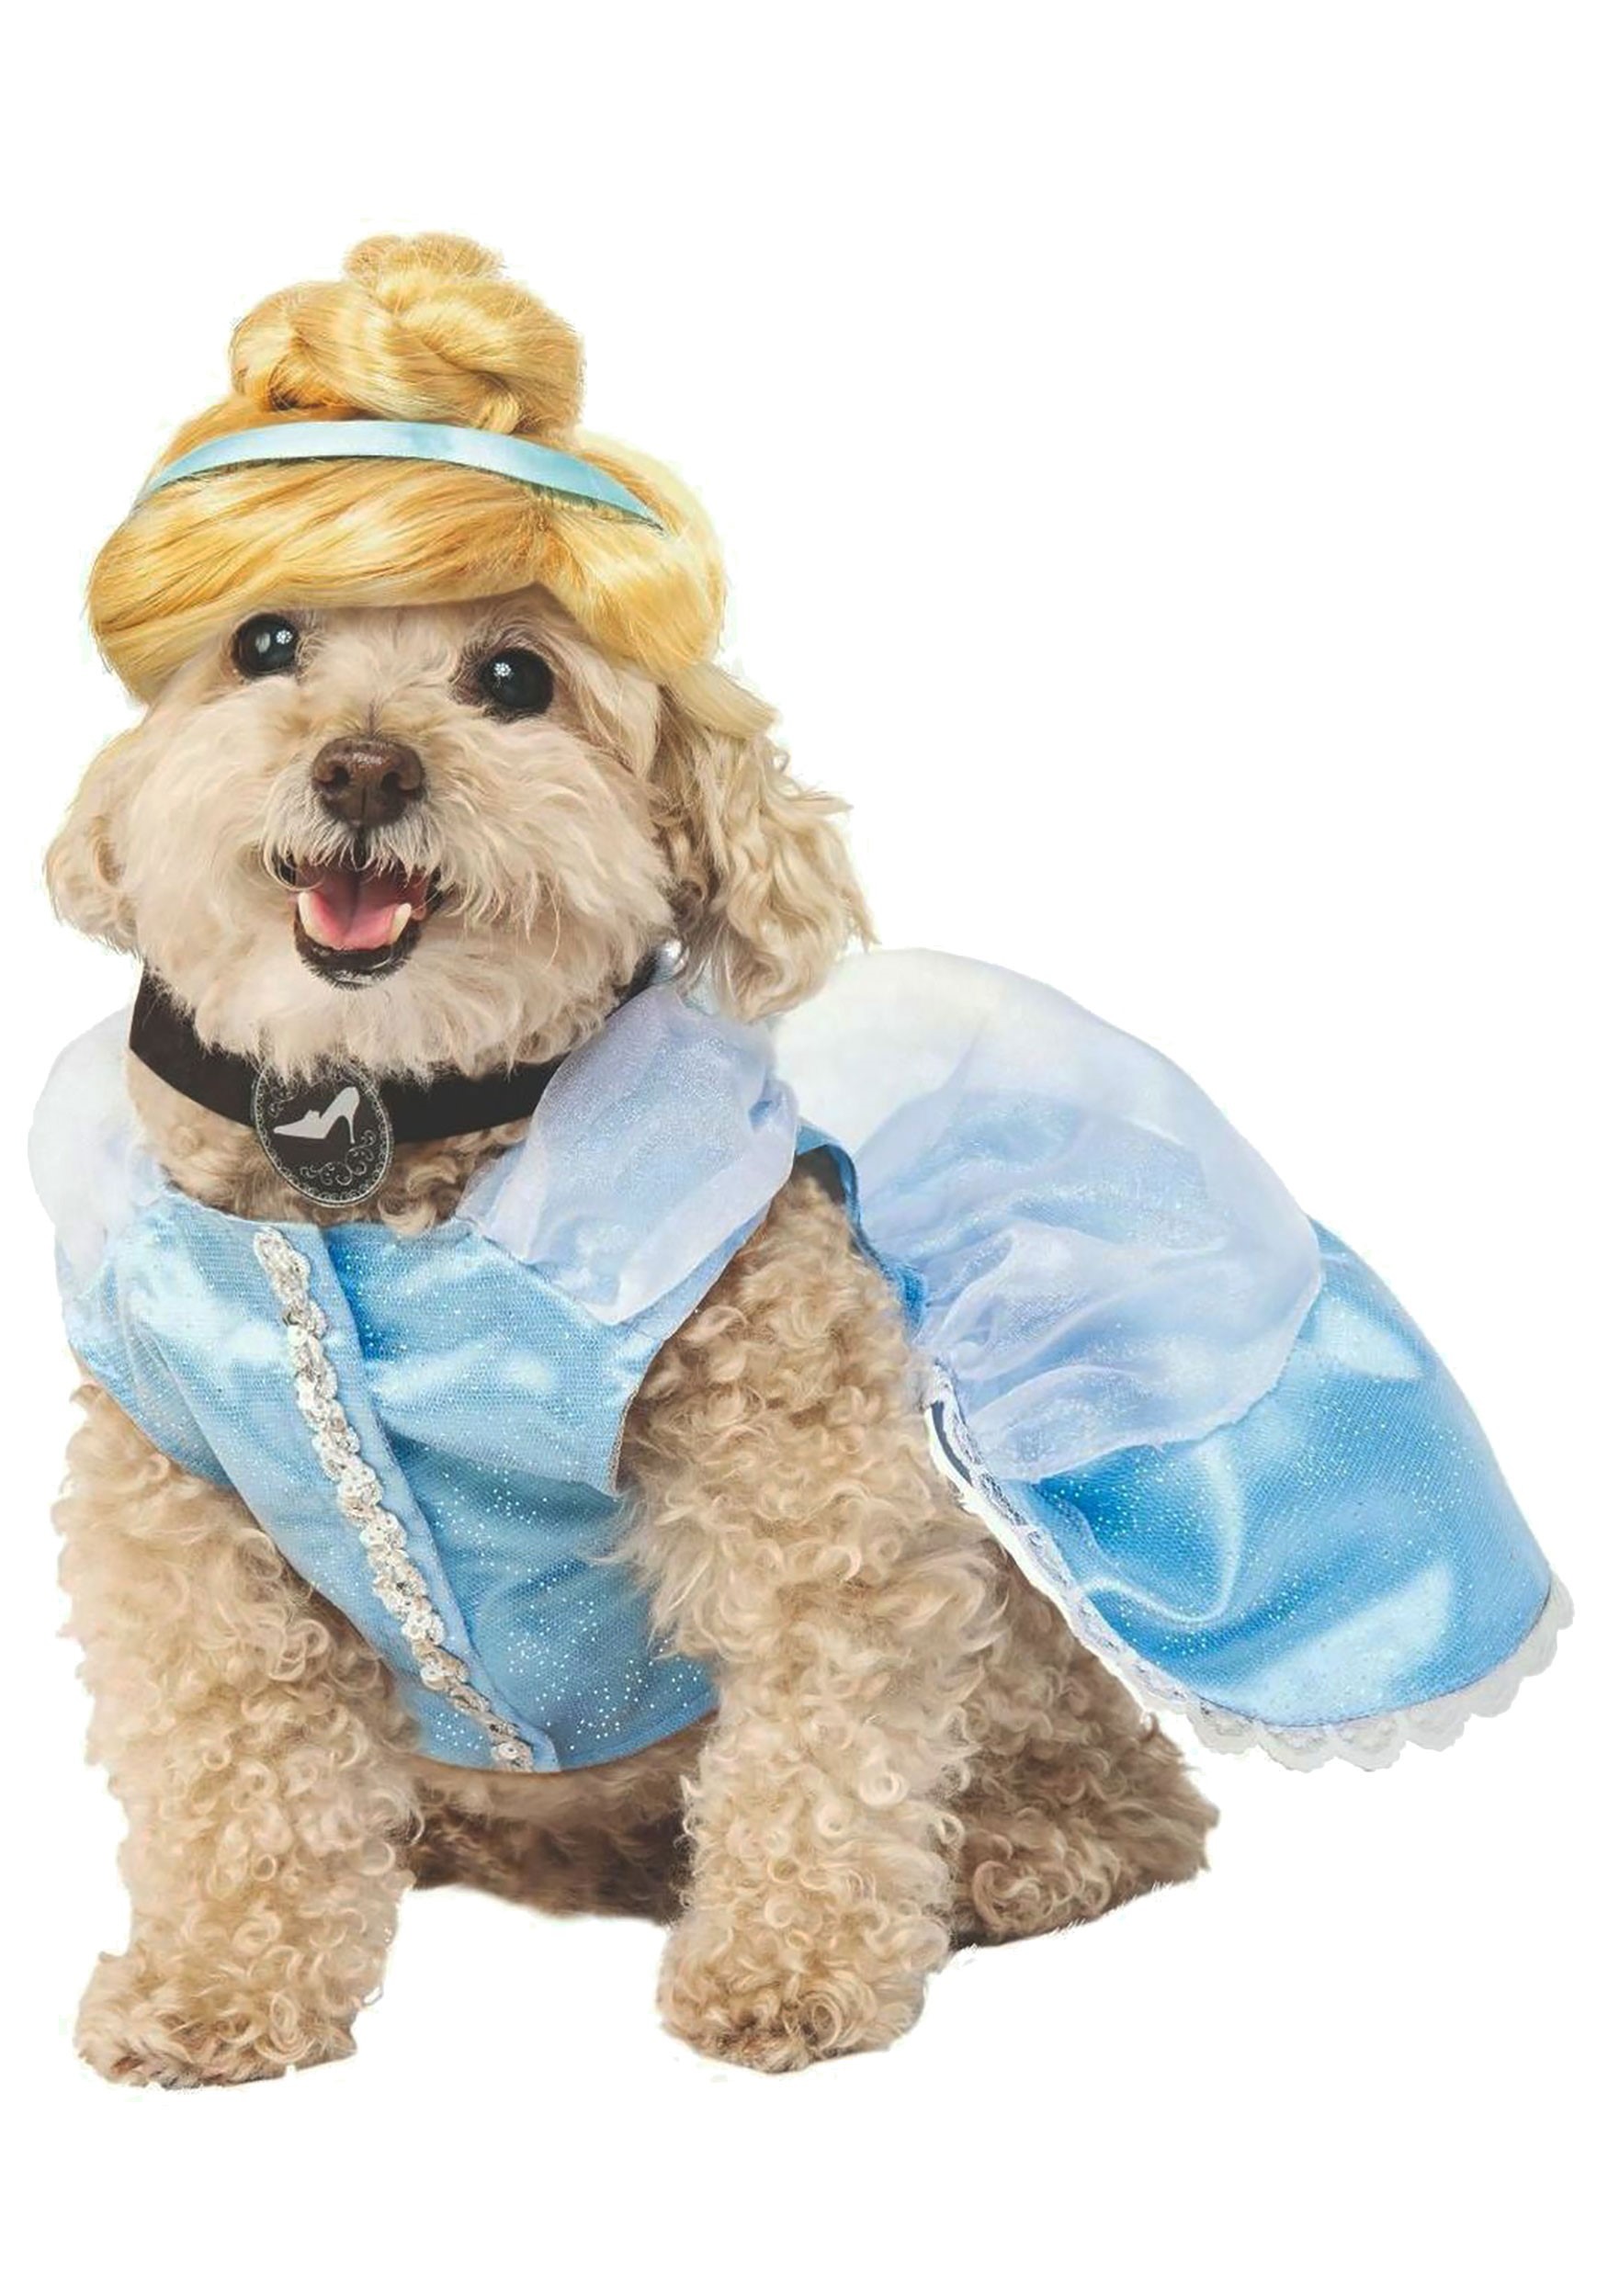 Dog Cinderella Costume